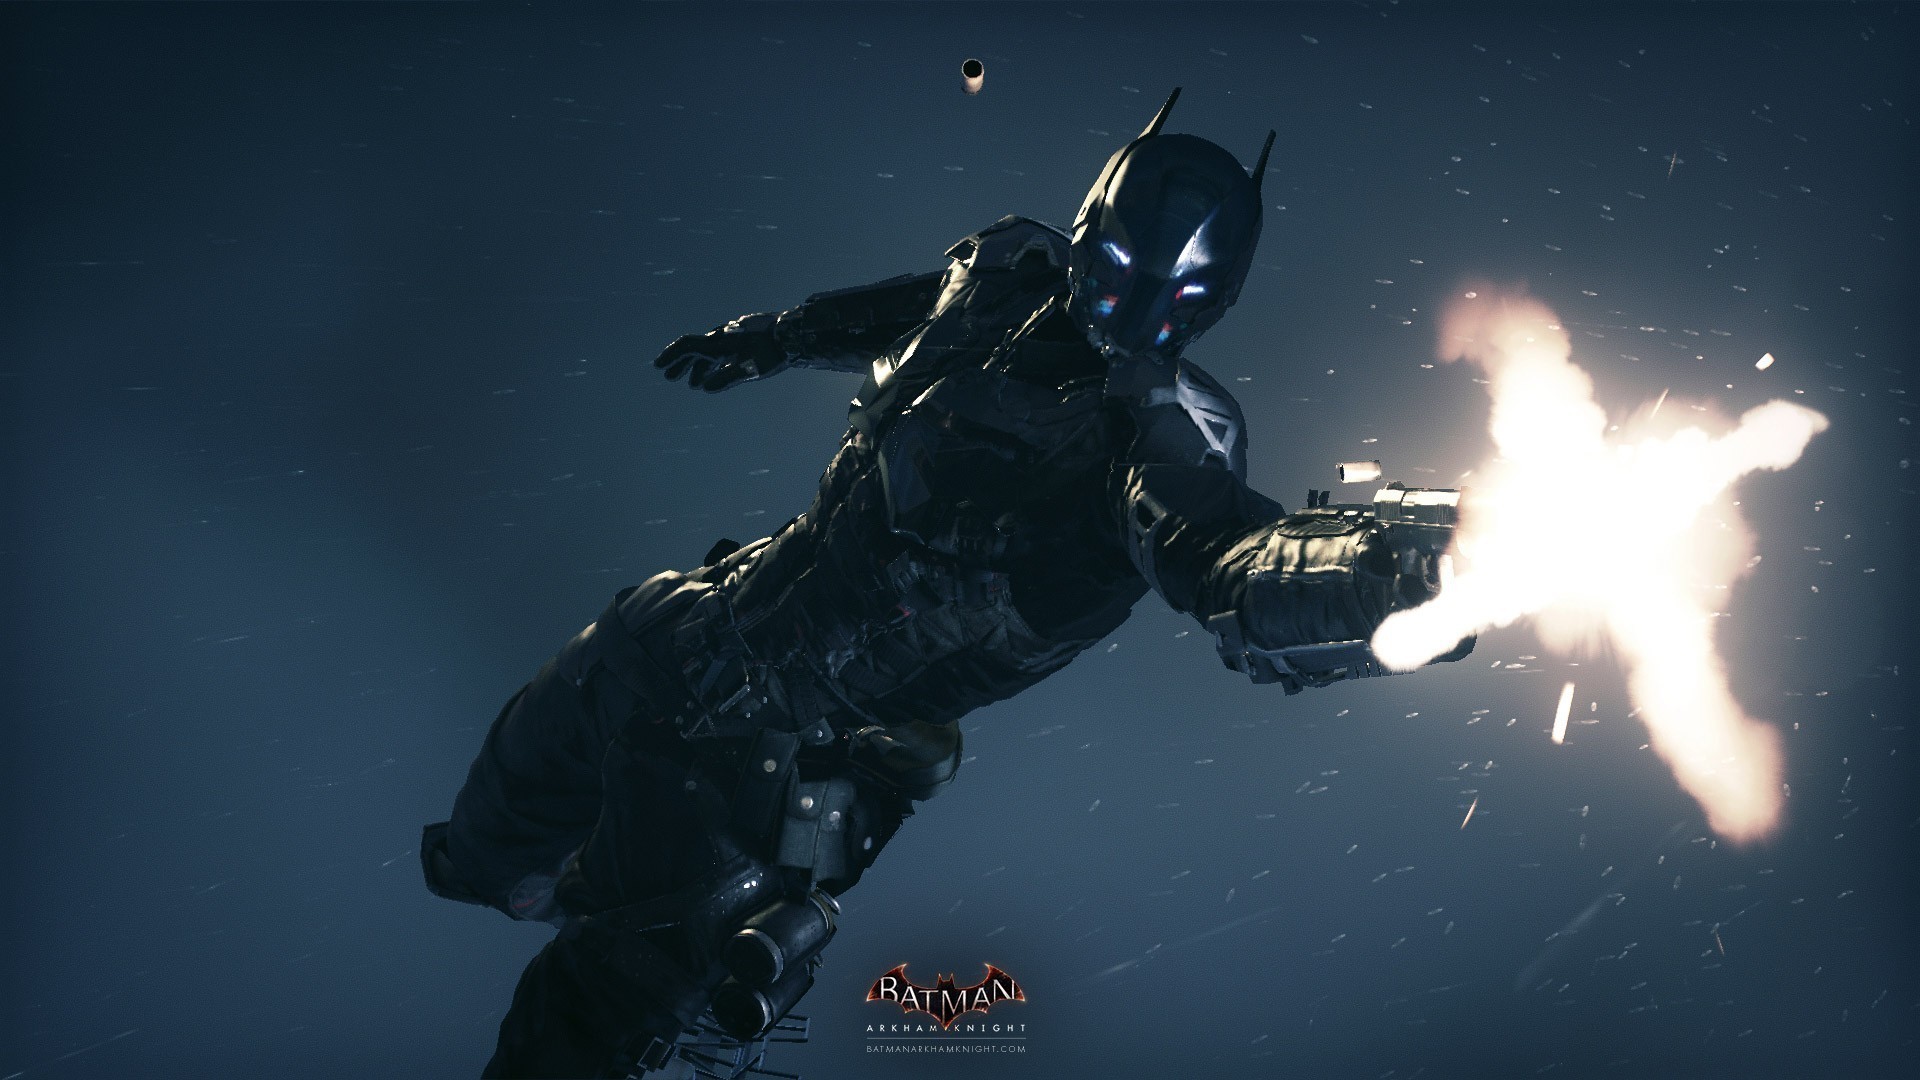 Batman: Arkham Knight Will Have New Game Plus Mode, Plenty of Secrets